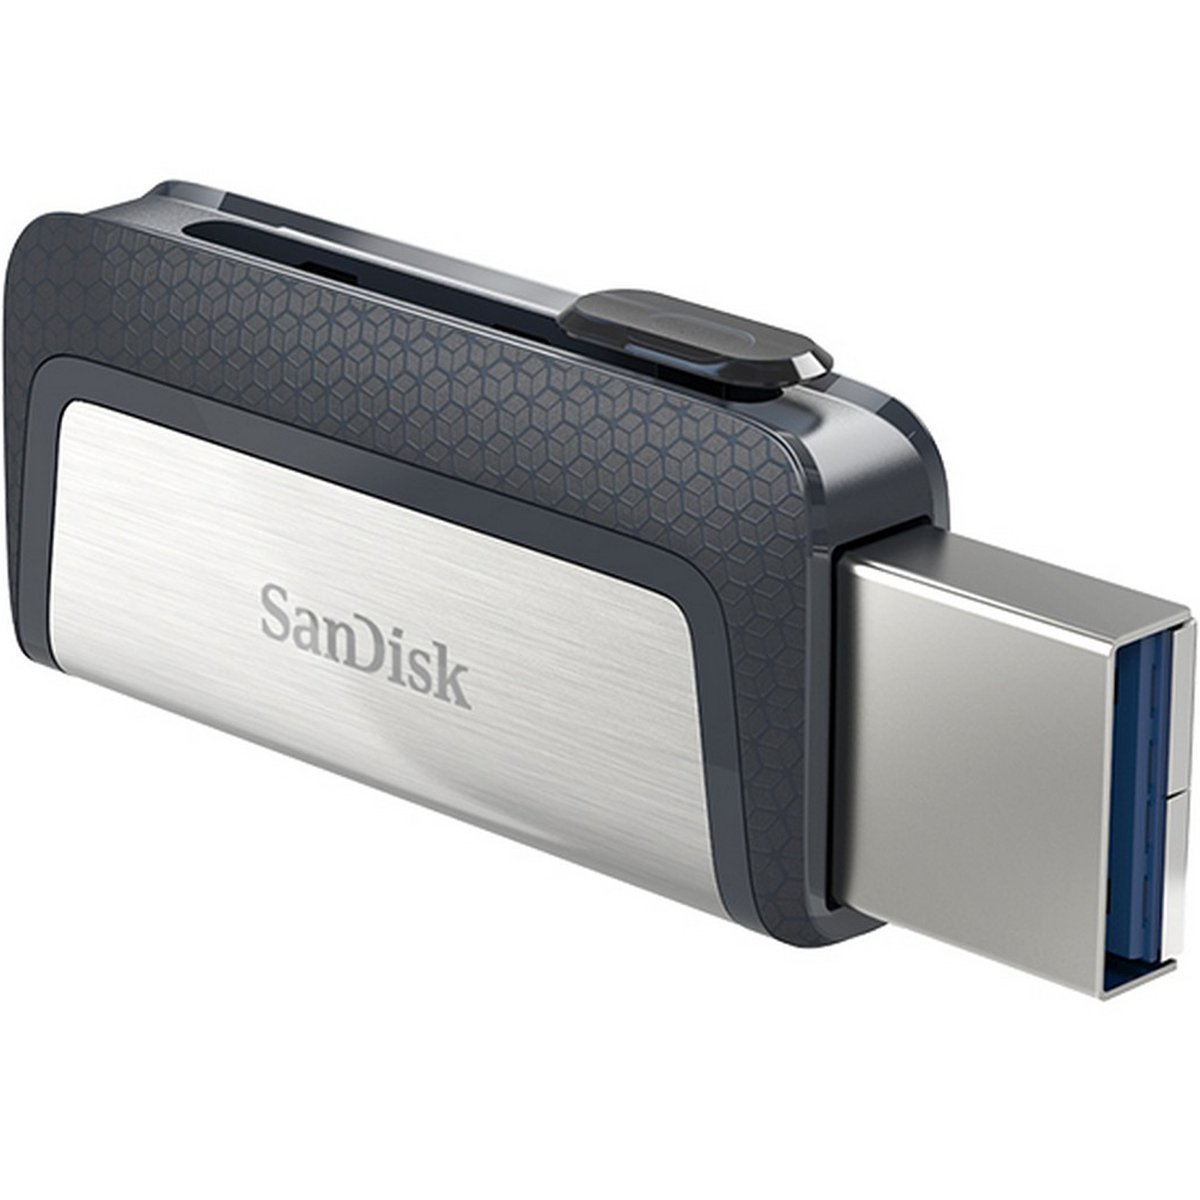 Sandisk Dual Flash Drive SDDDC2-016 16GB